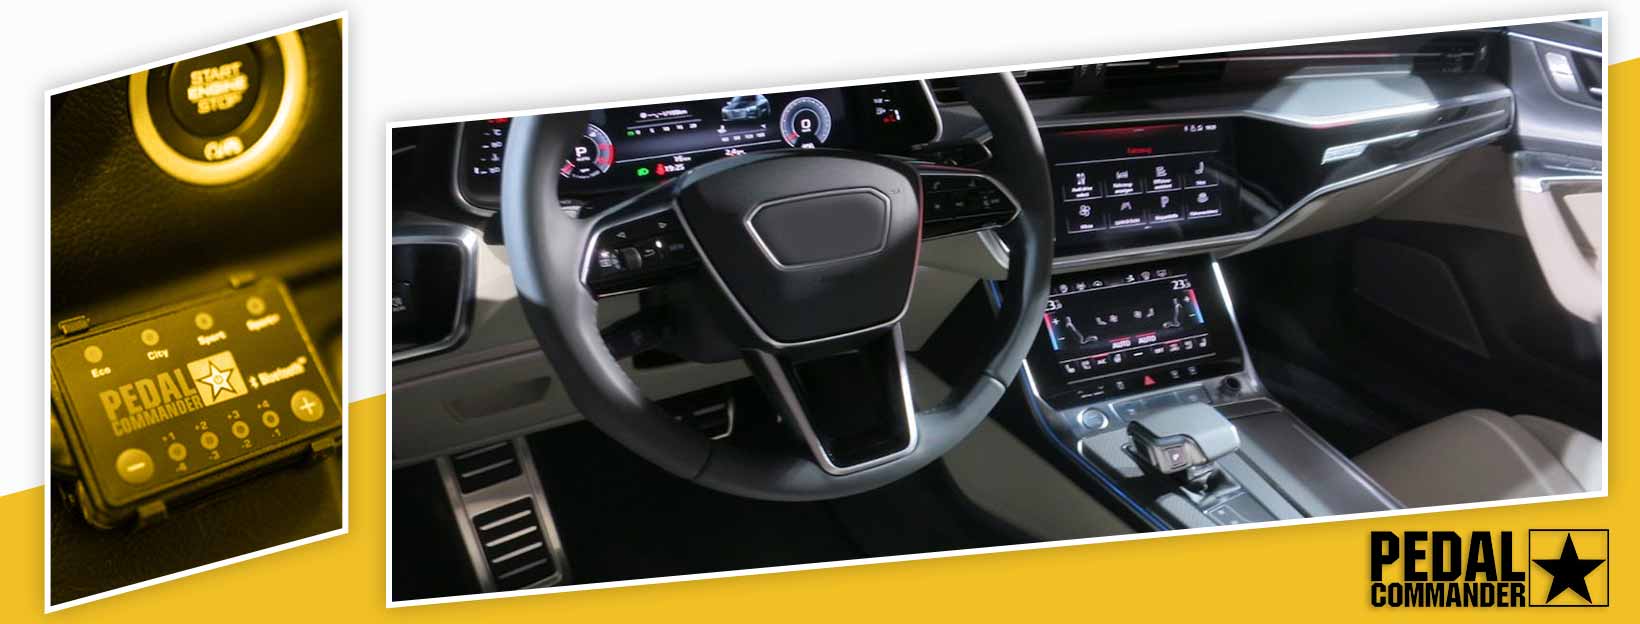 Pedal Commander for Audi A7 - interior